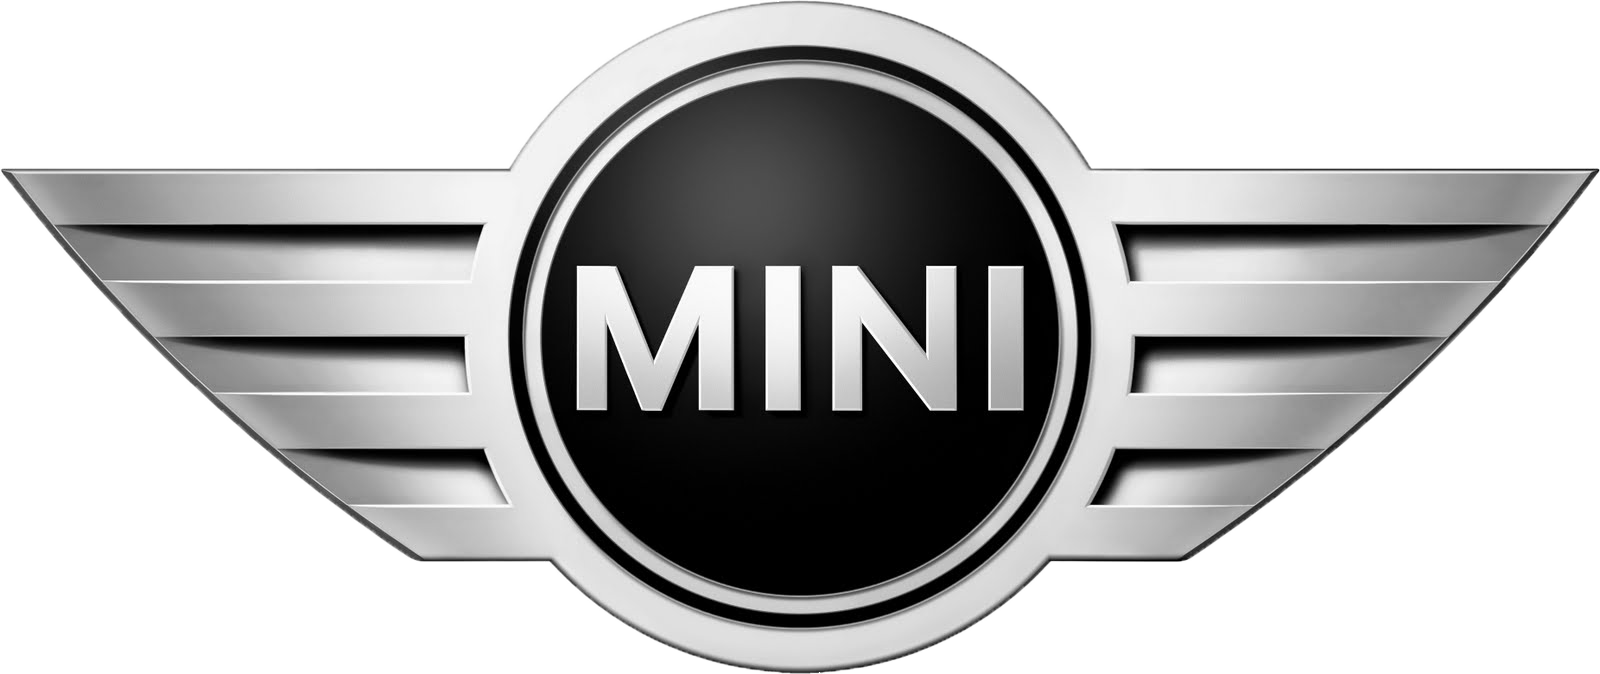 Mini Cooper logo PNG.